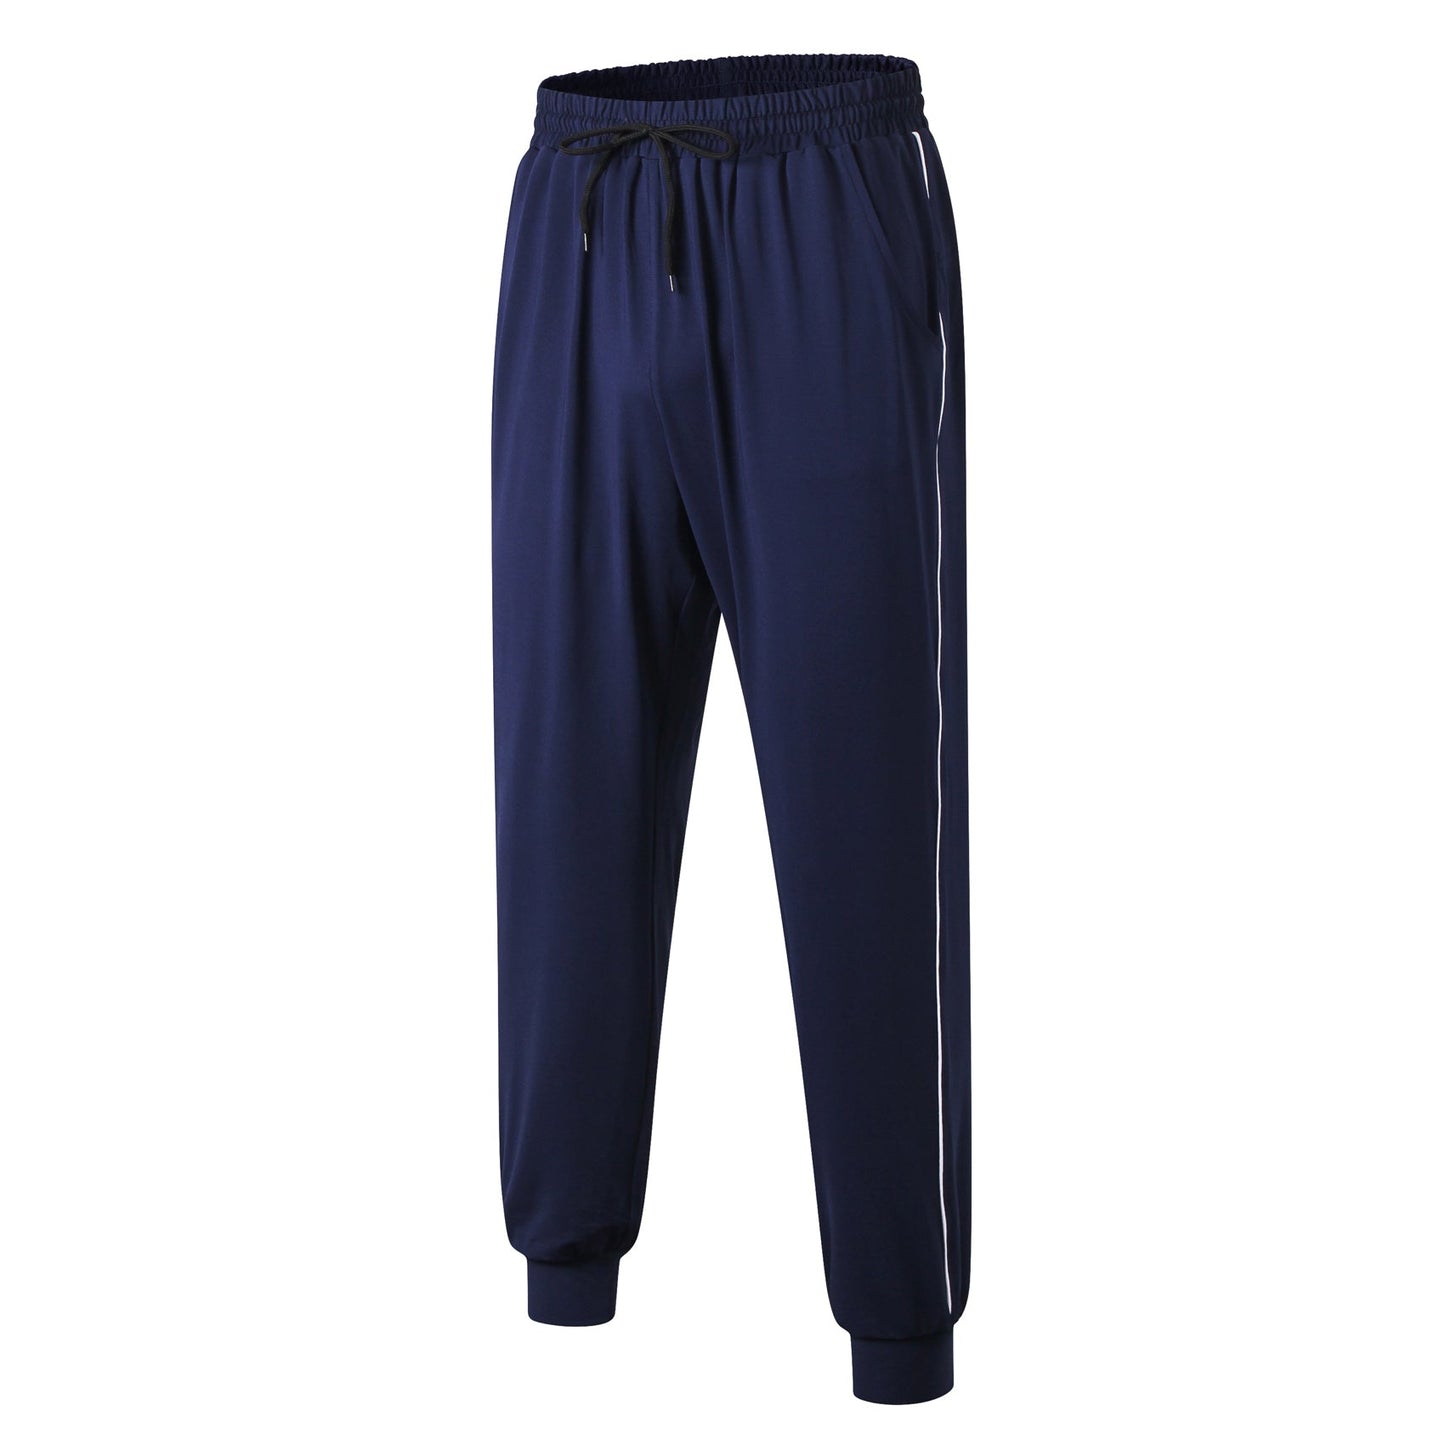 Mens Casual Sweatpants with Pockets Elastic Waist Drawstring Pants for Athletic Jogging Running LANBAOSI